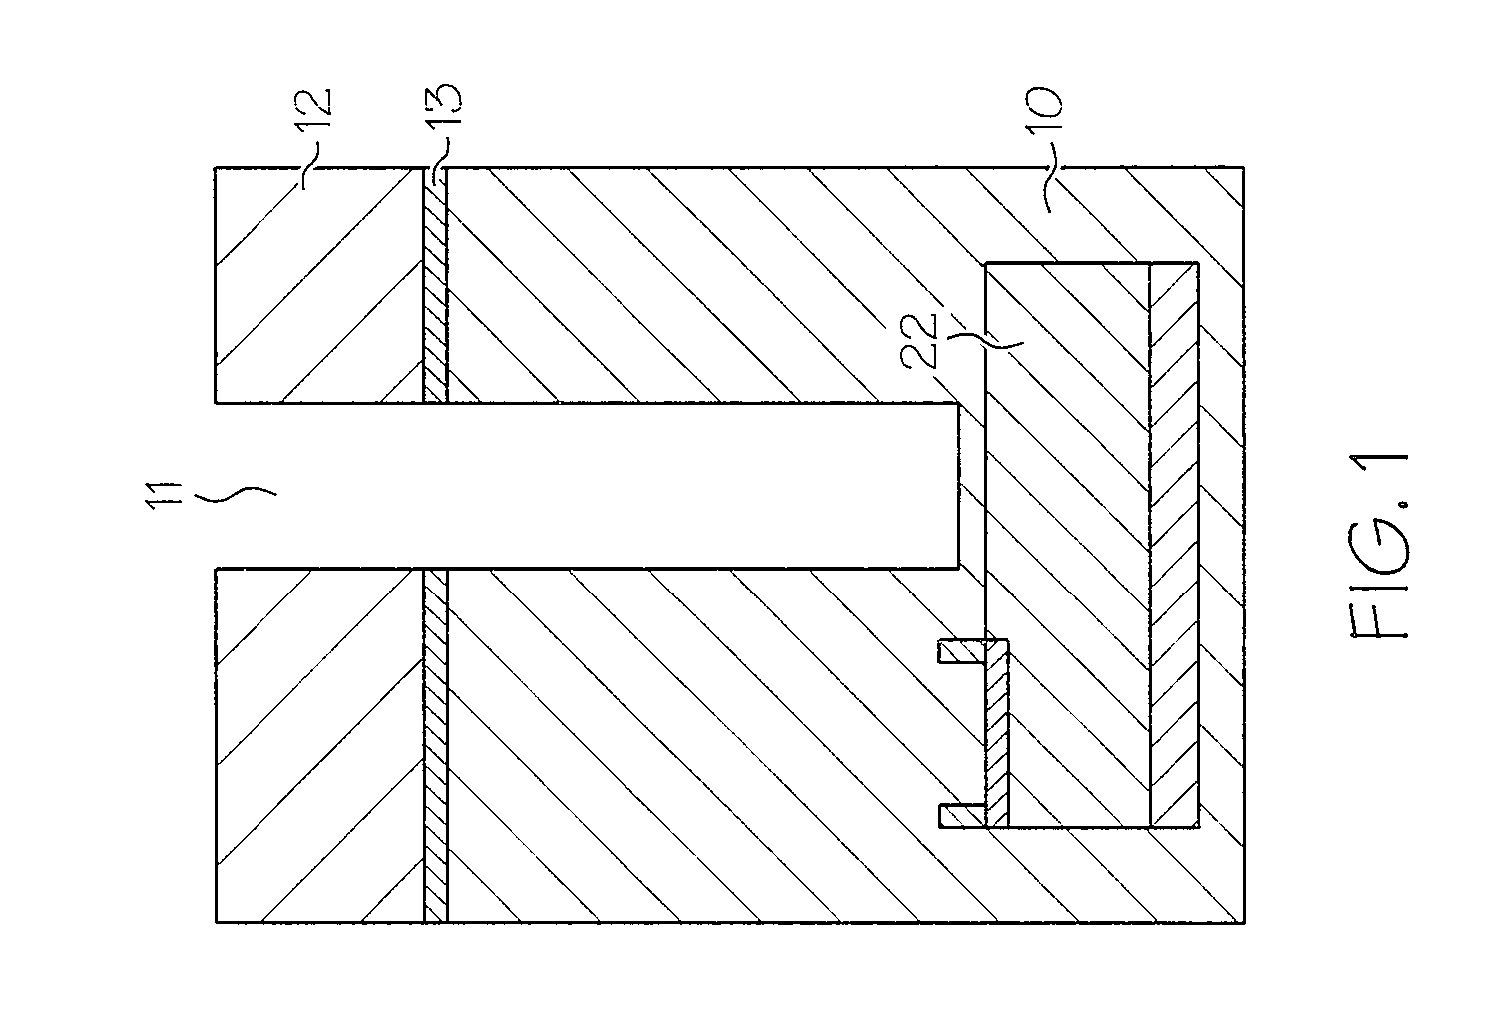 Method for Manufacturing Vertical Germanium Detectors